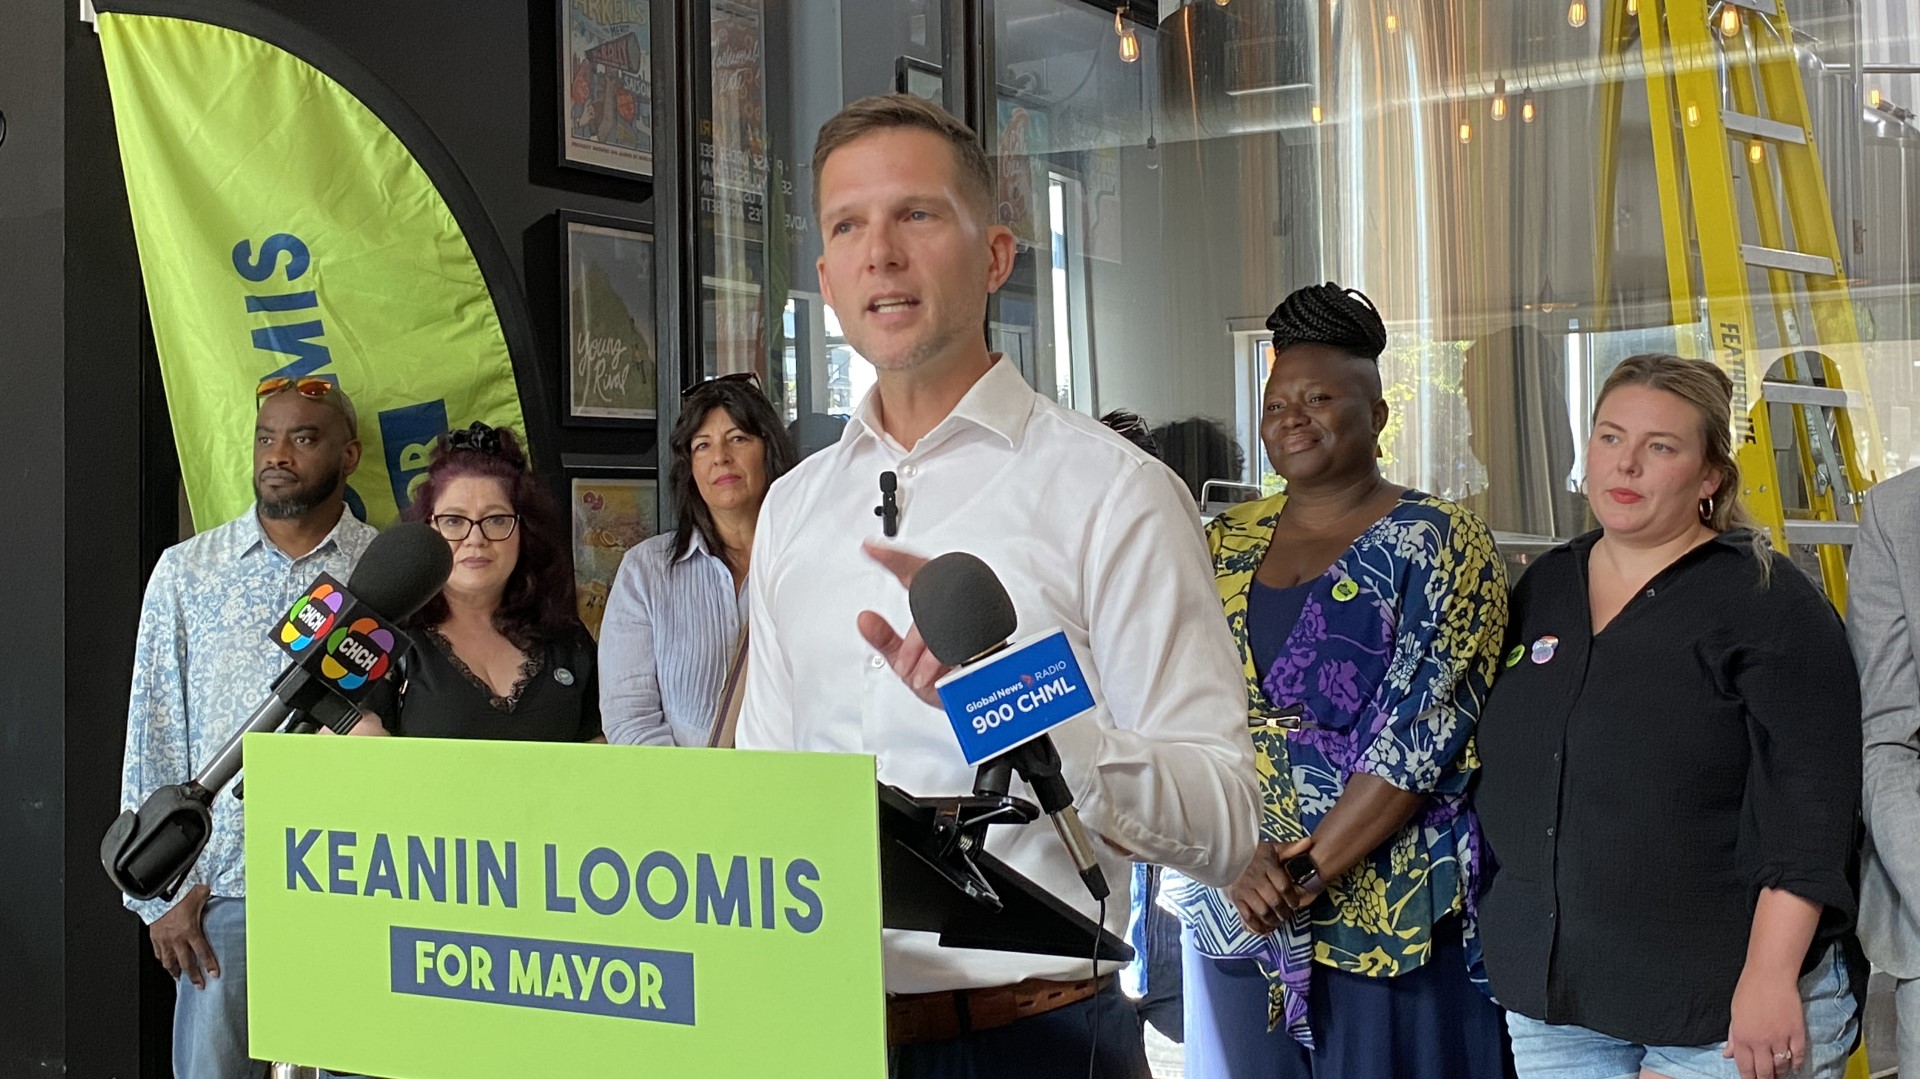 Keanin Loomis promises change at Hamilton city hall as part of mayoral  campaign platform - Hamilton